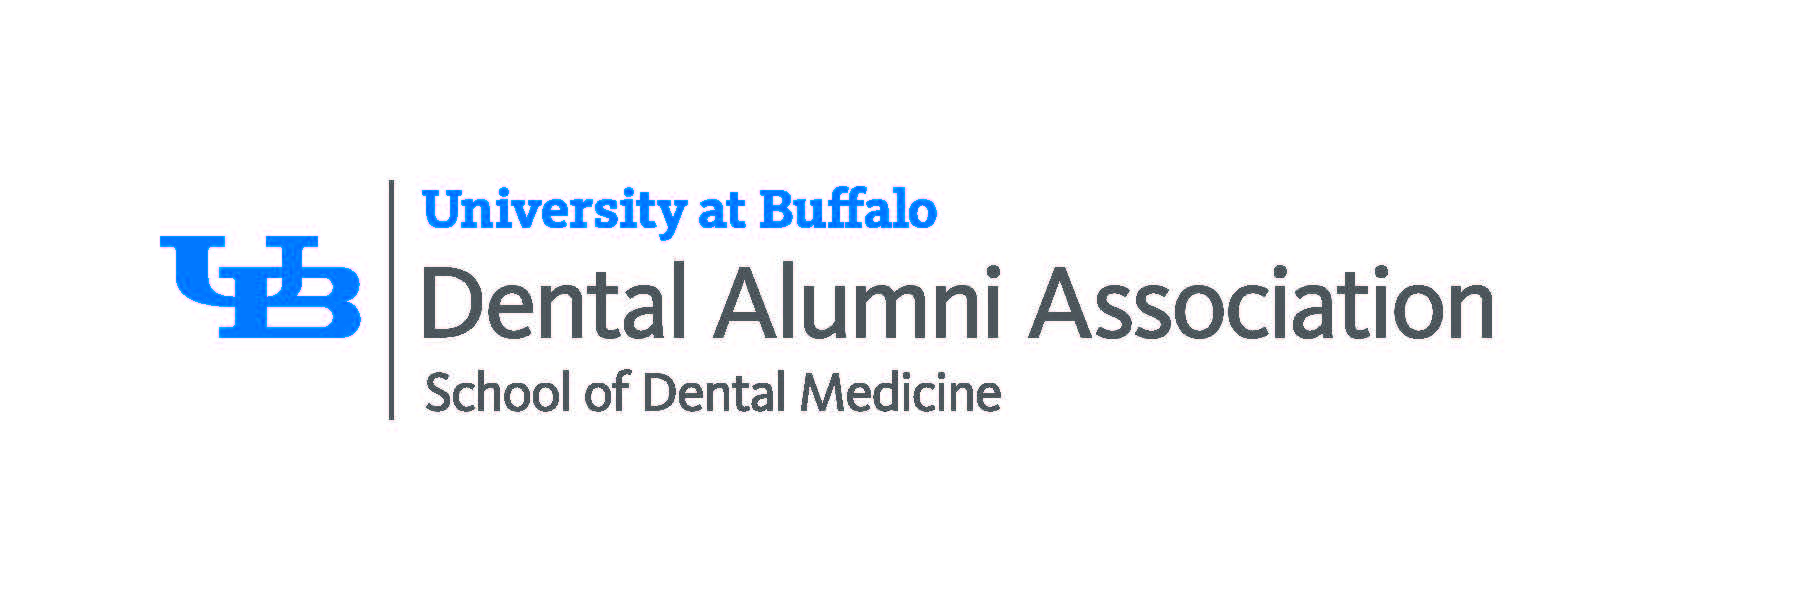 UB Dental Alumni Home